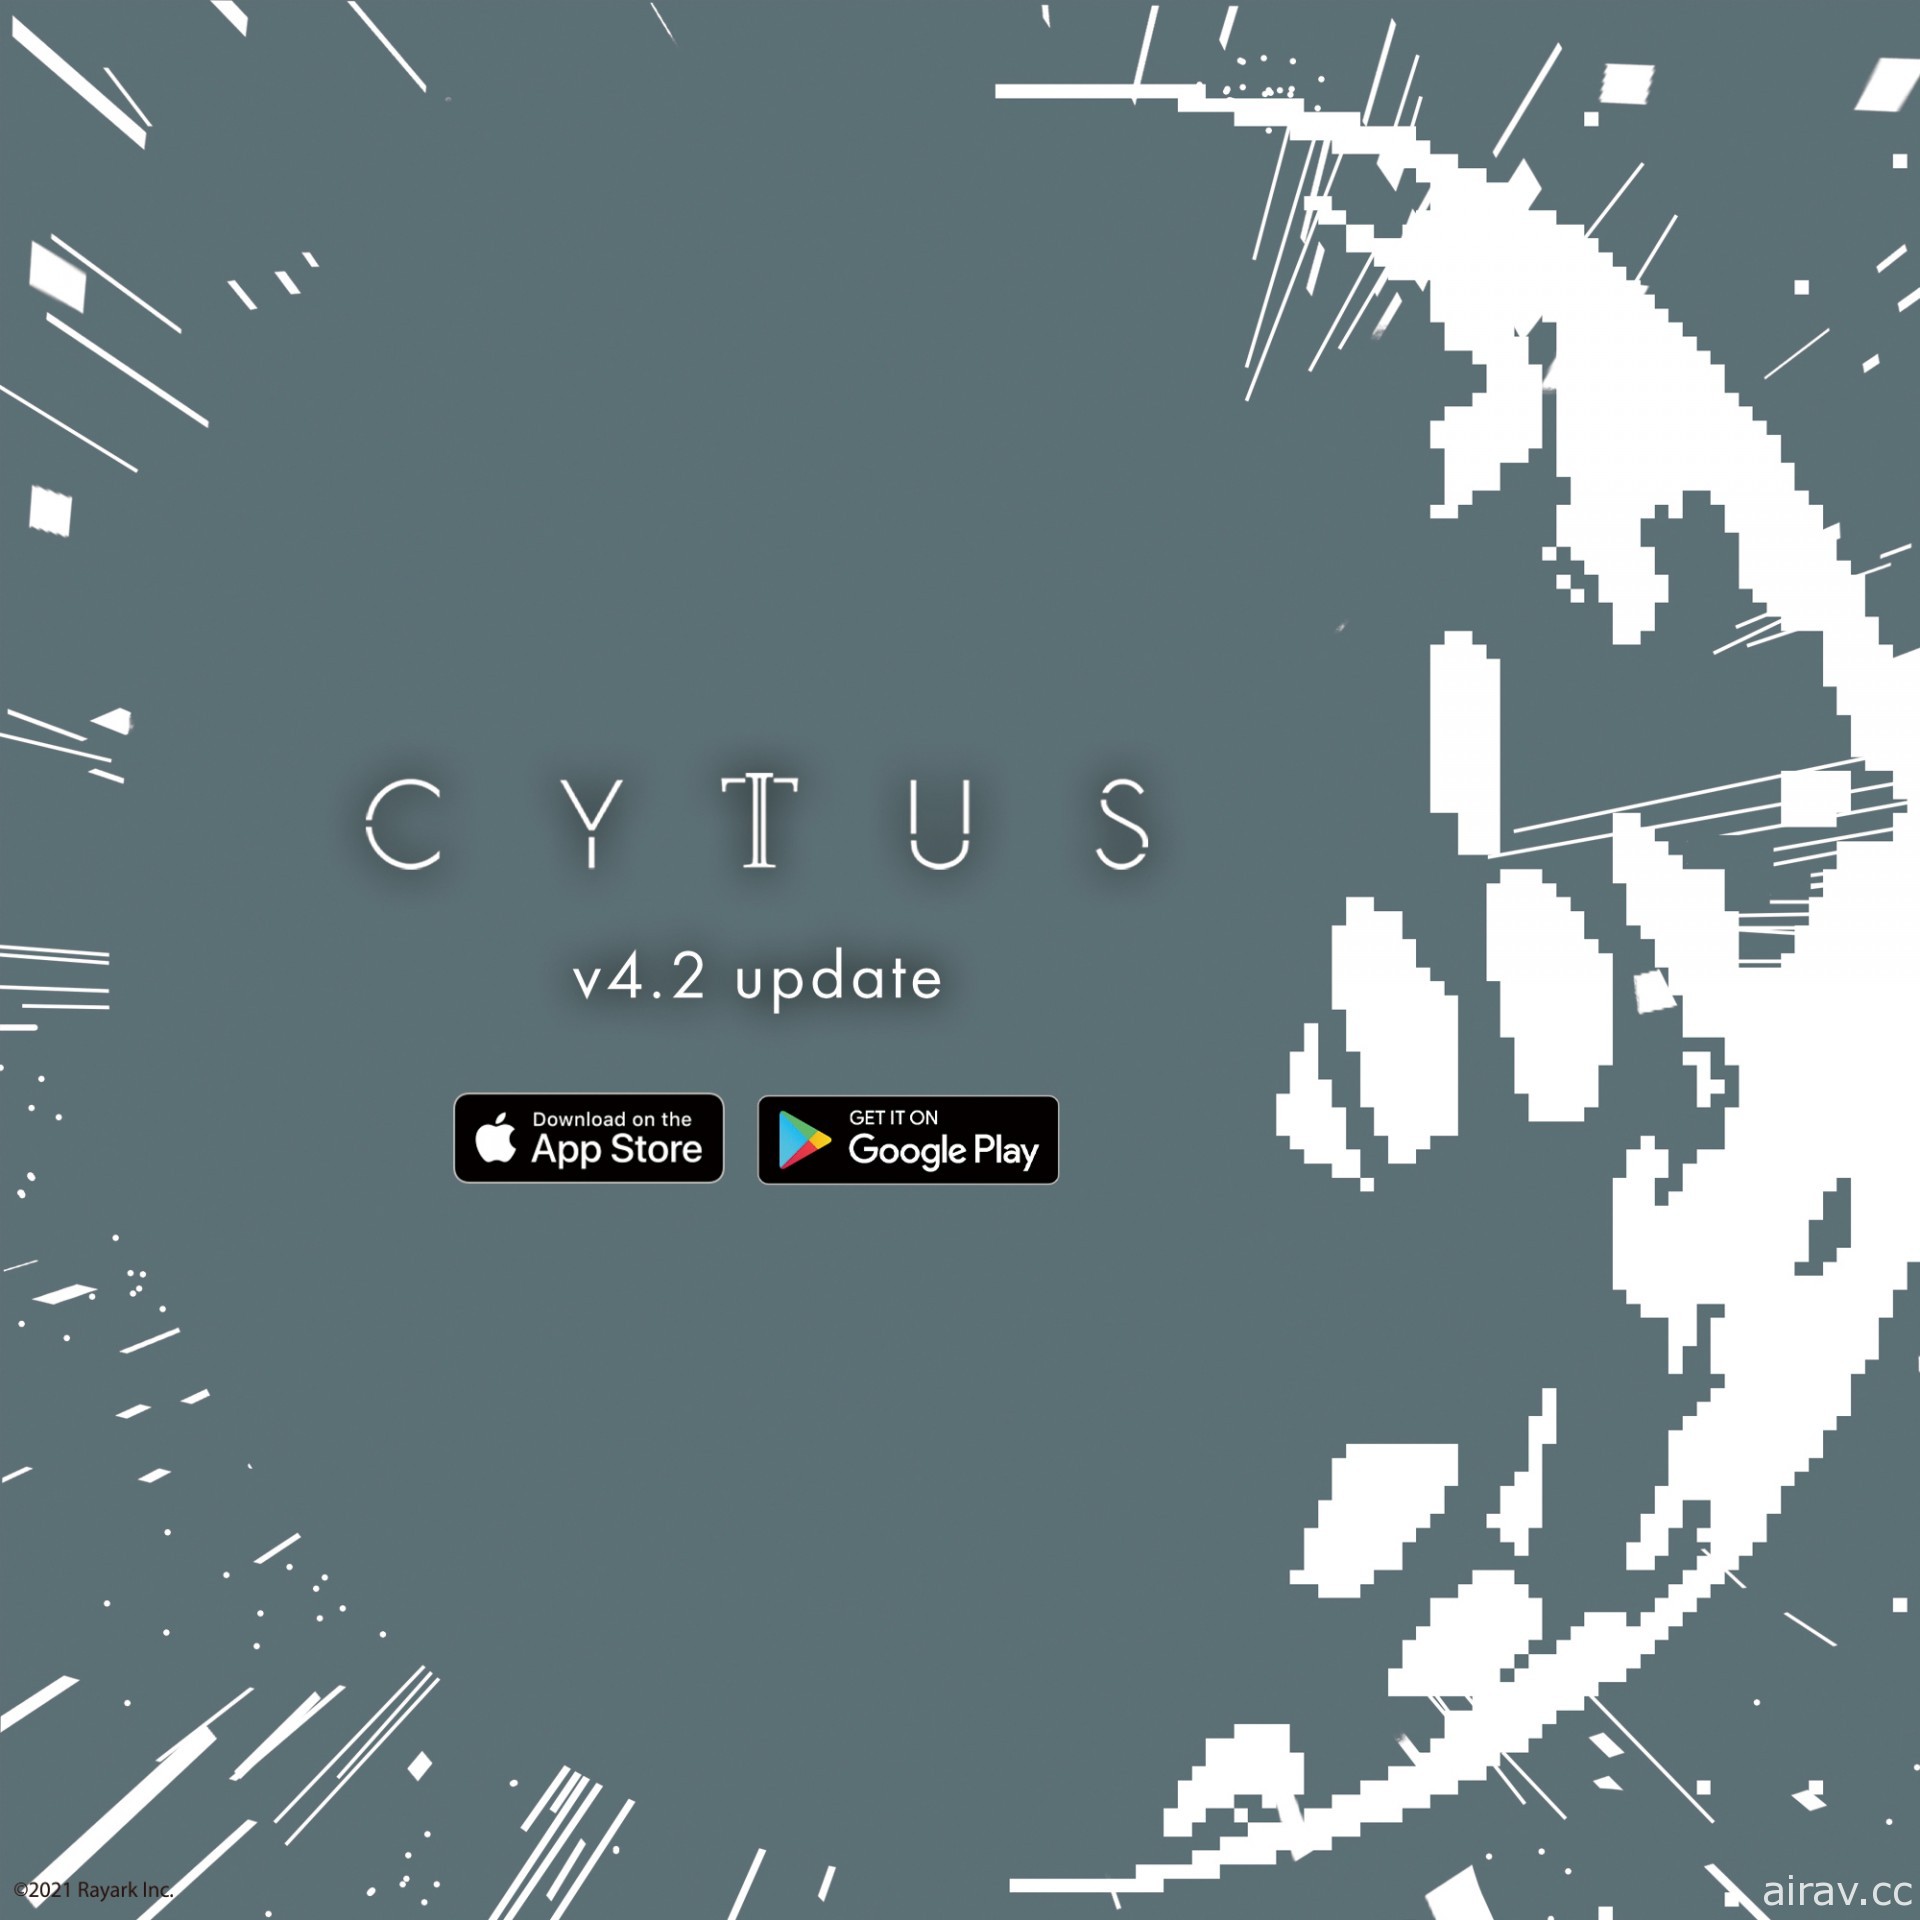 《Cytus II》 4.2 版本更新因技術問題導致 Android 裝置玩家紀錄繼承失敗 將提供補償